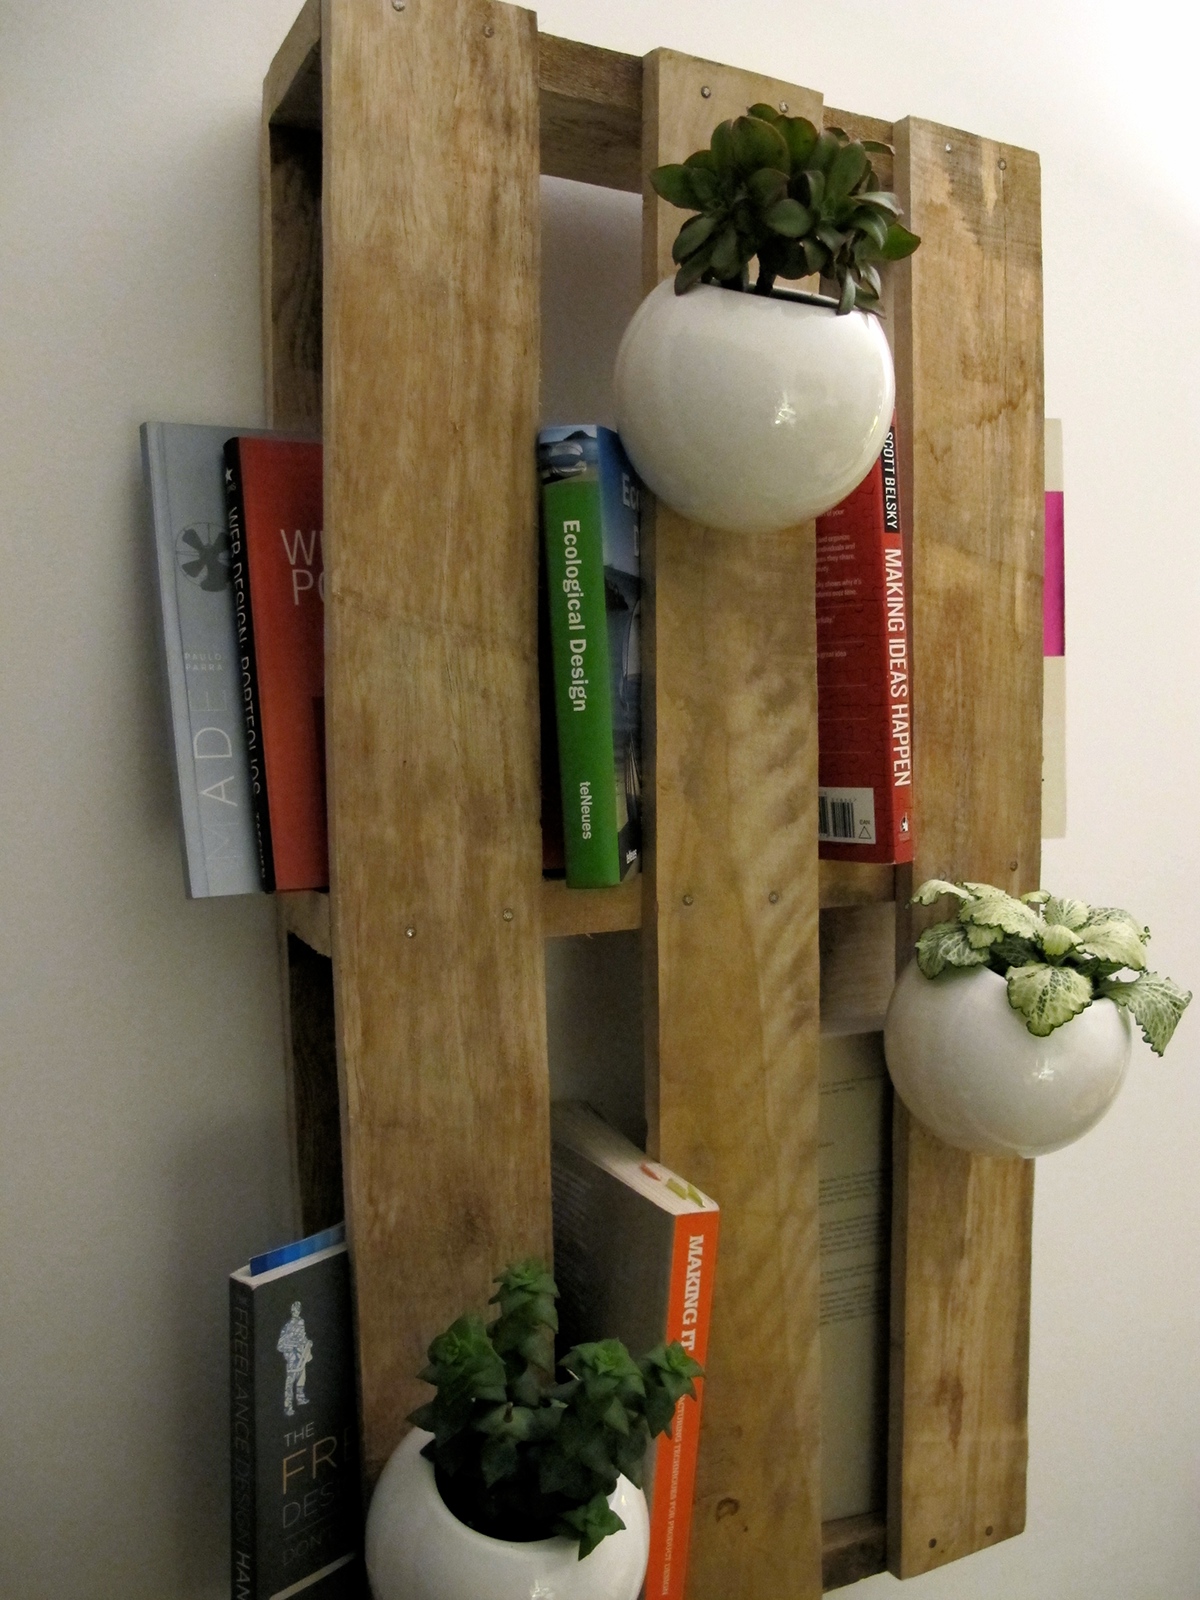 Pallette bookshelf hack design